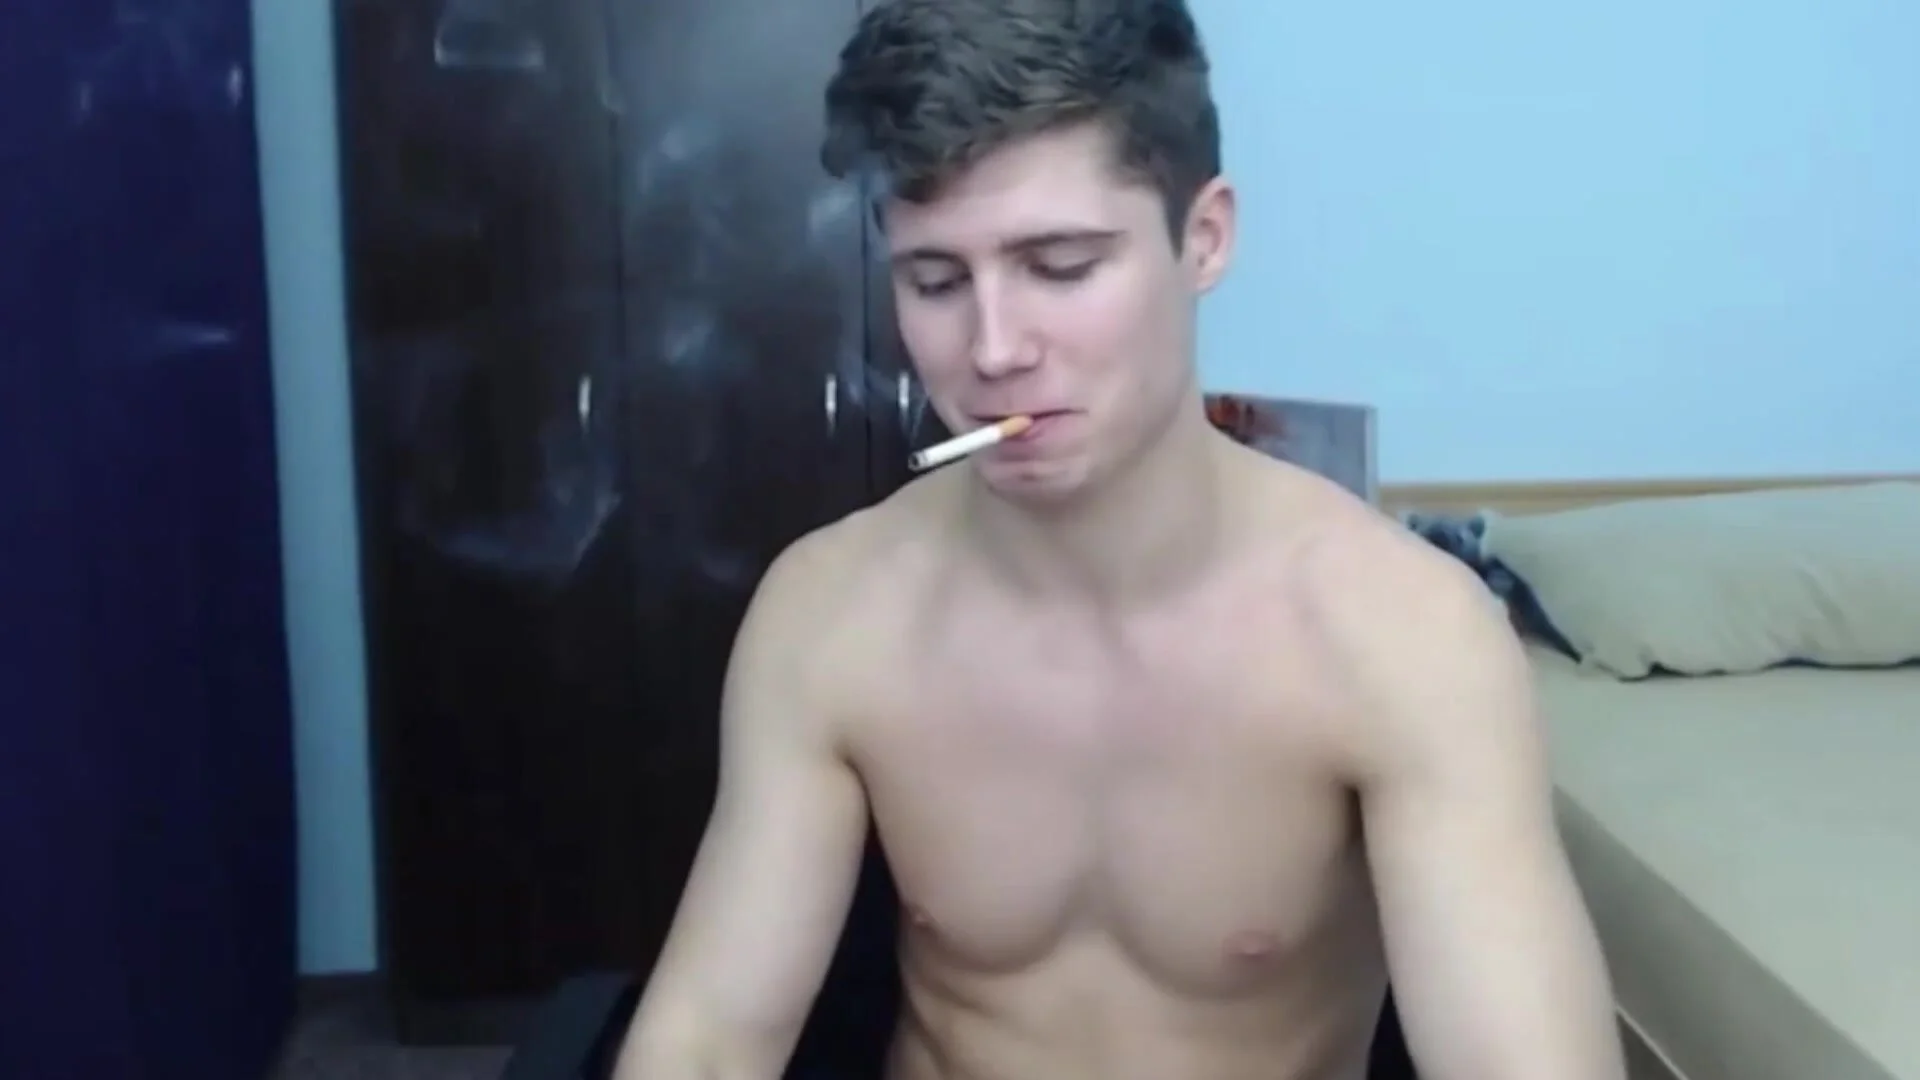 Smoke (cute): Hot boy smoking - video 4 - ThisVid.com